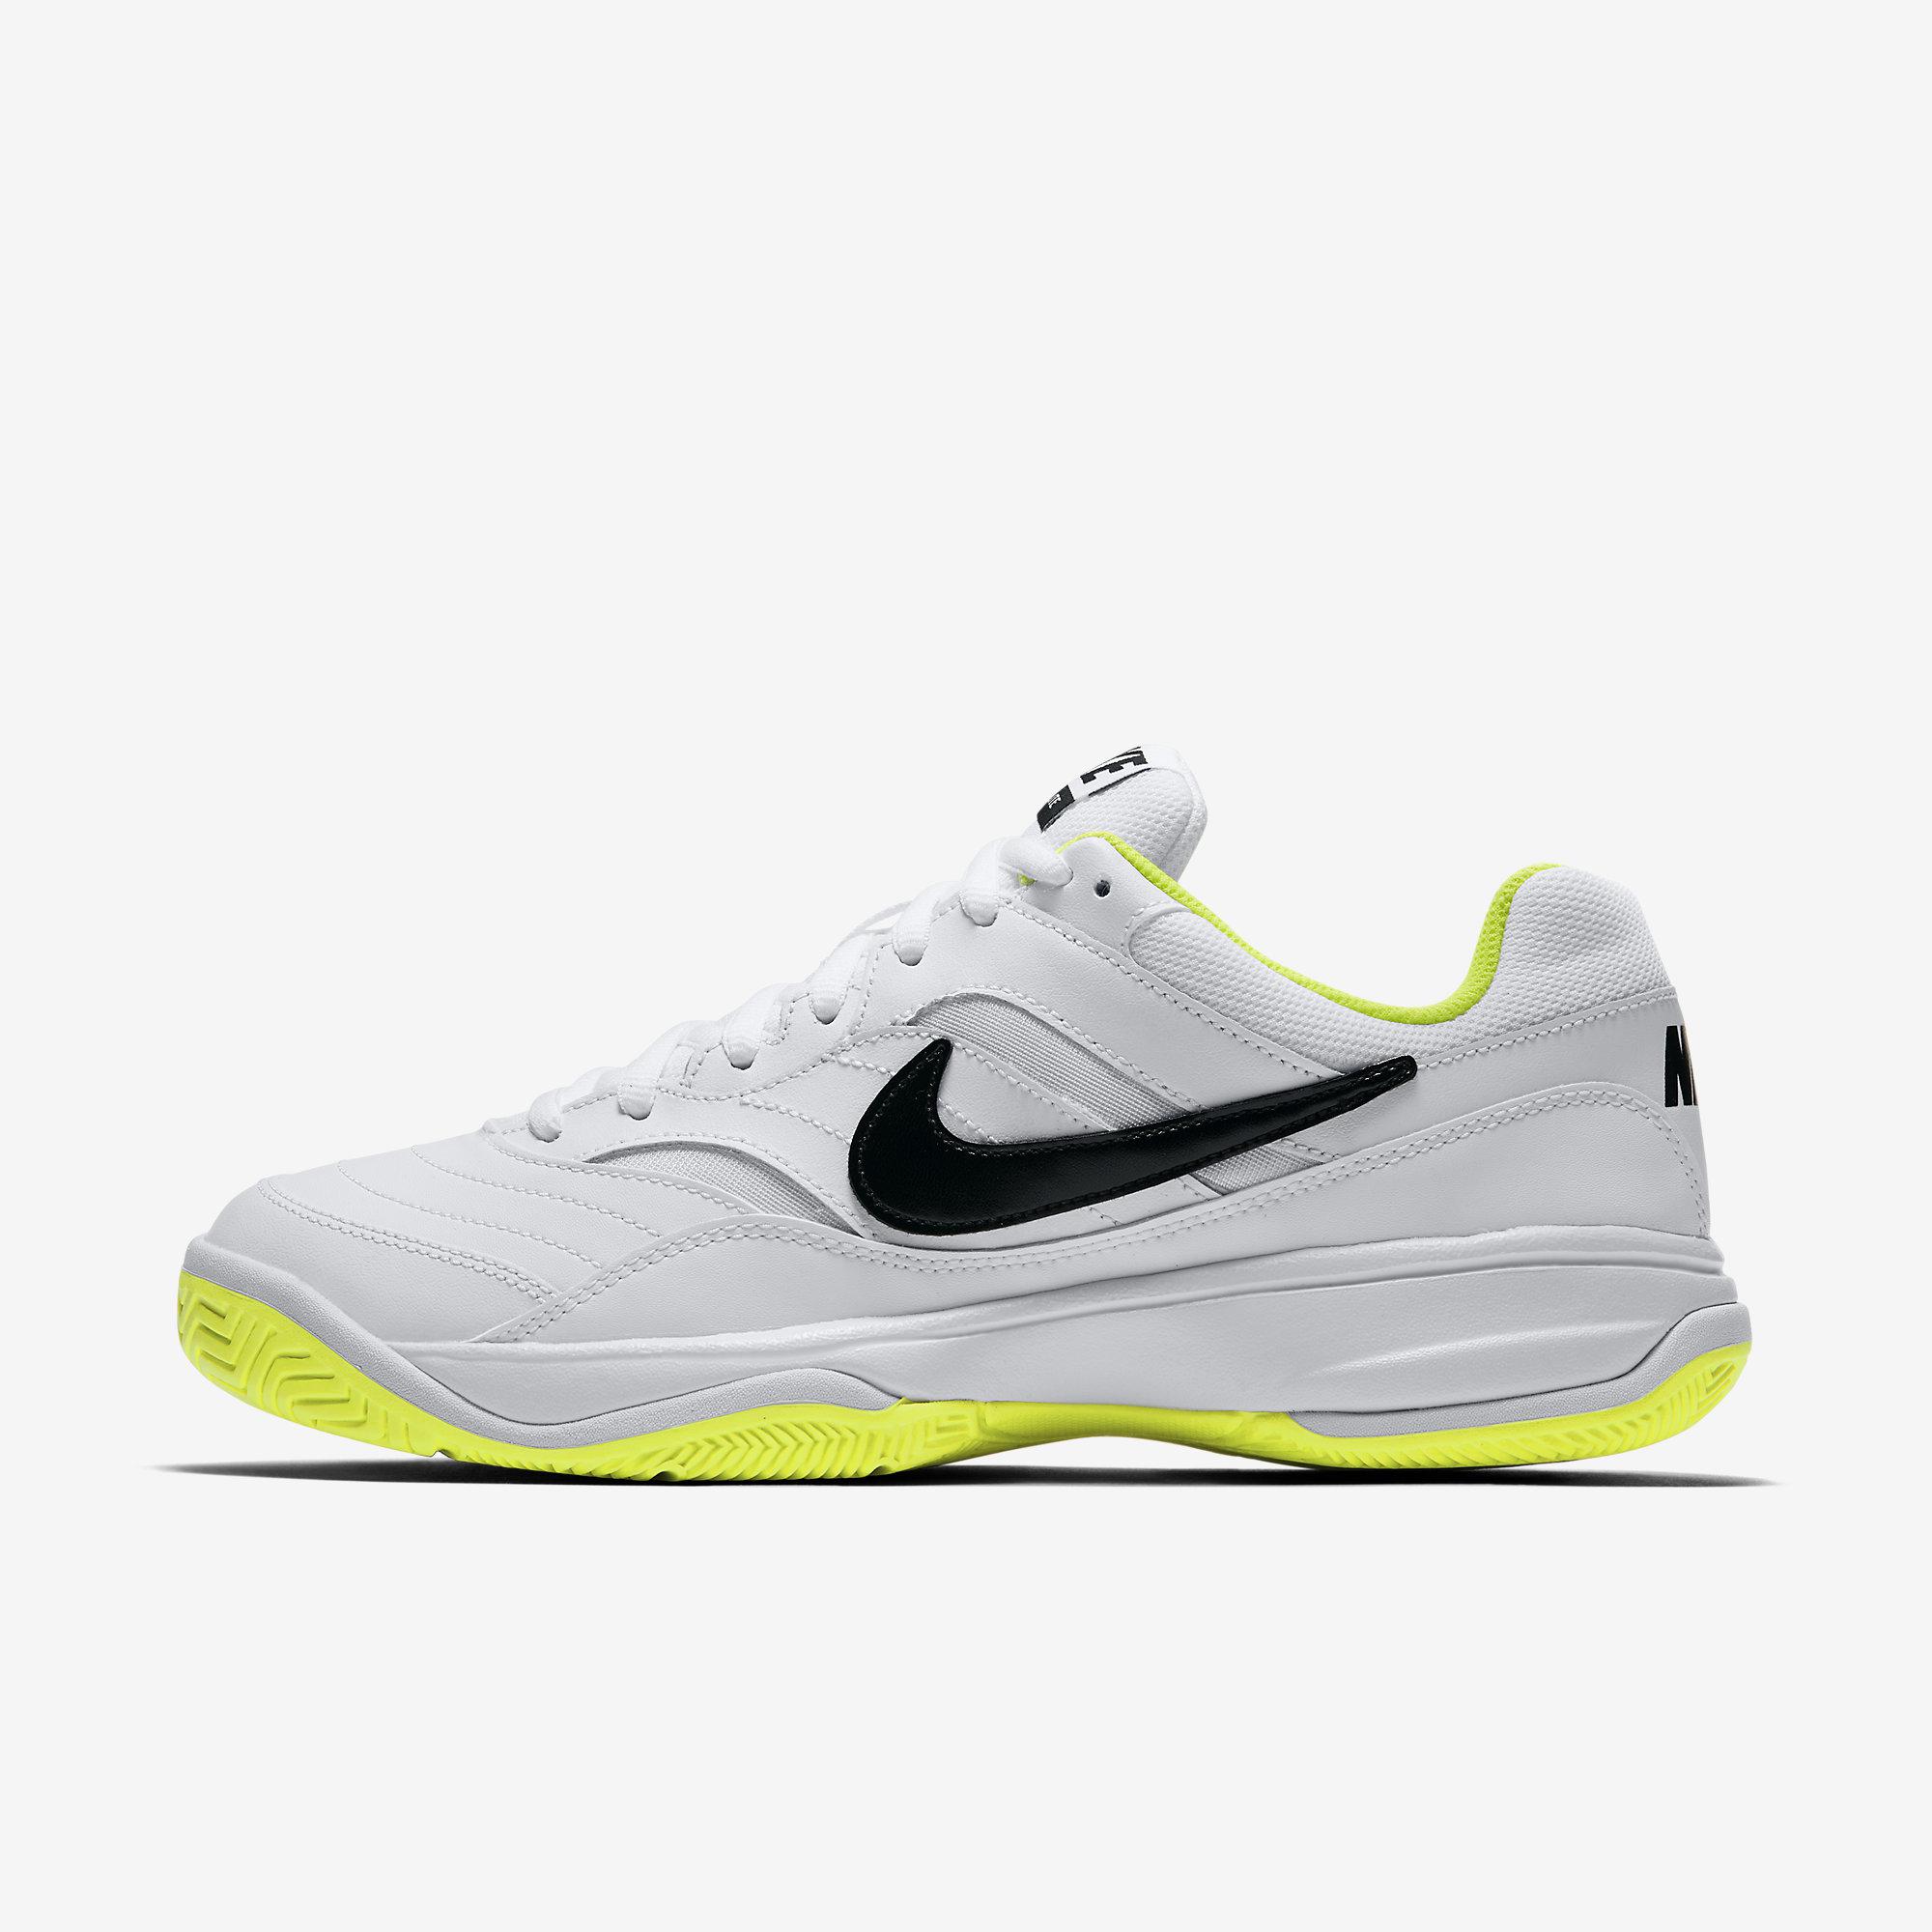 Nike Mens Court Lite Tennis Shoes - White/Volt - Tennisnuts.com